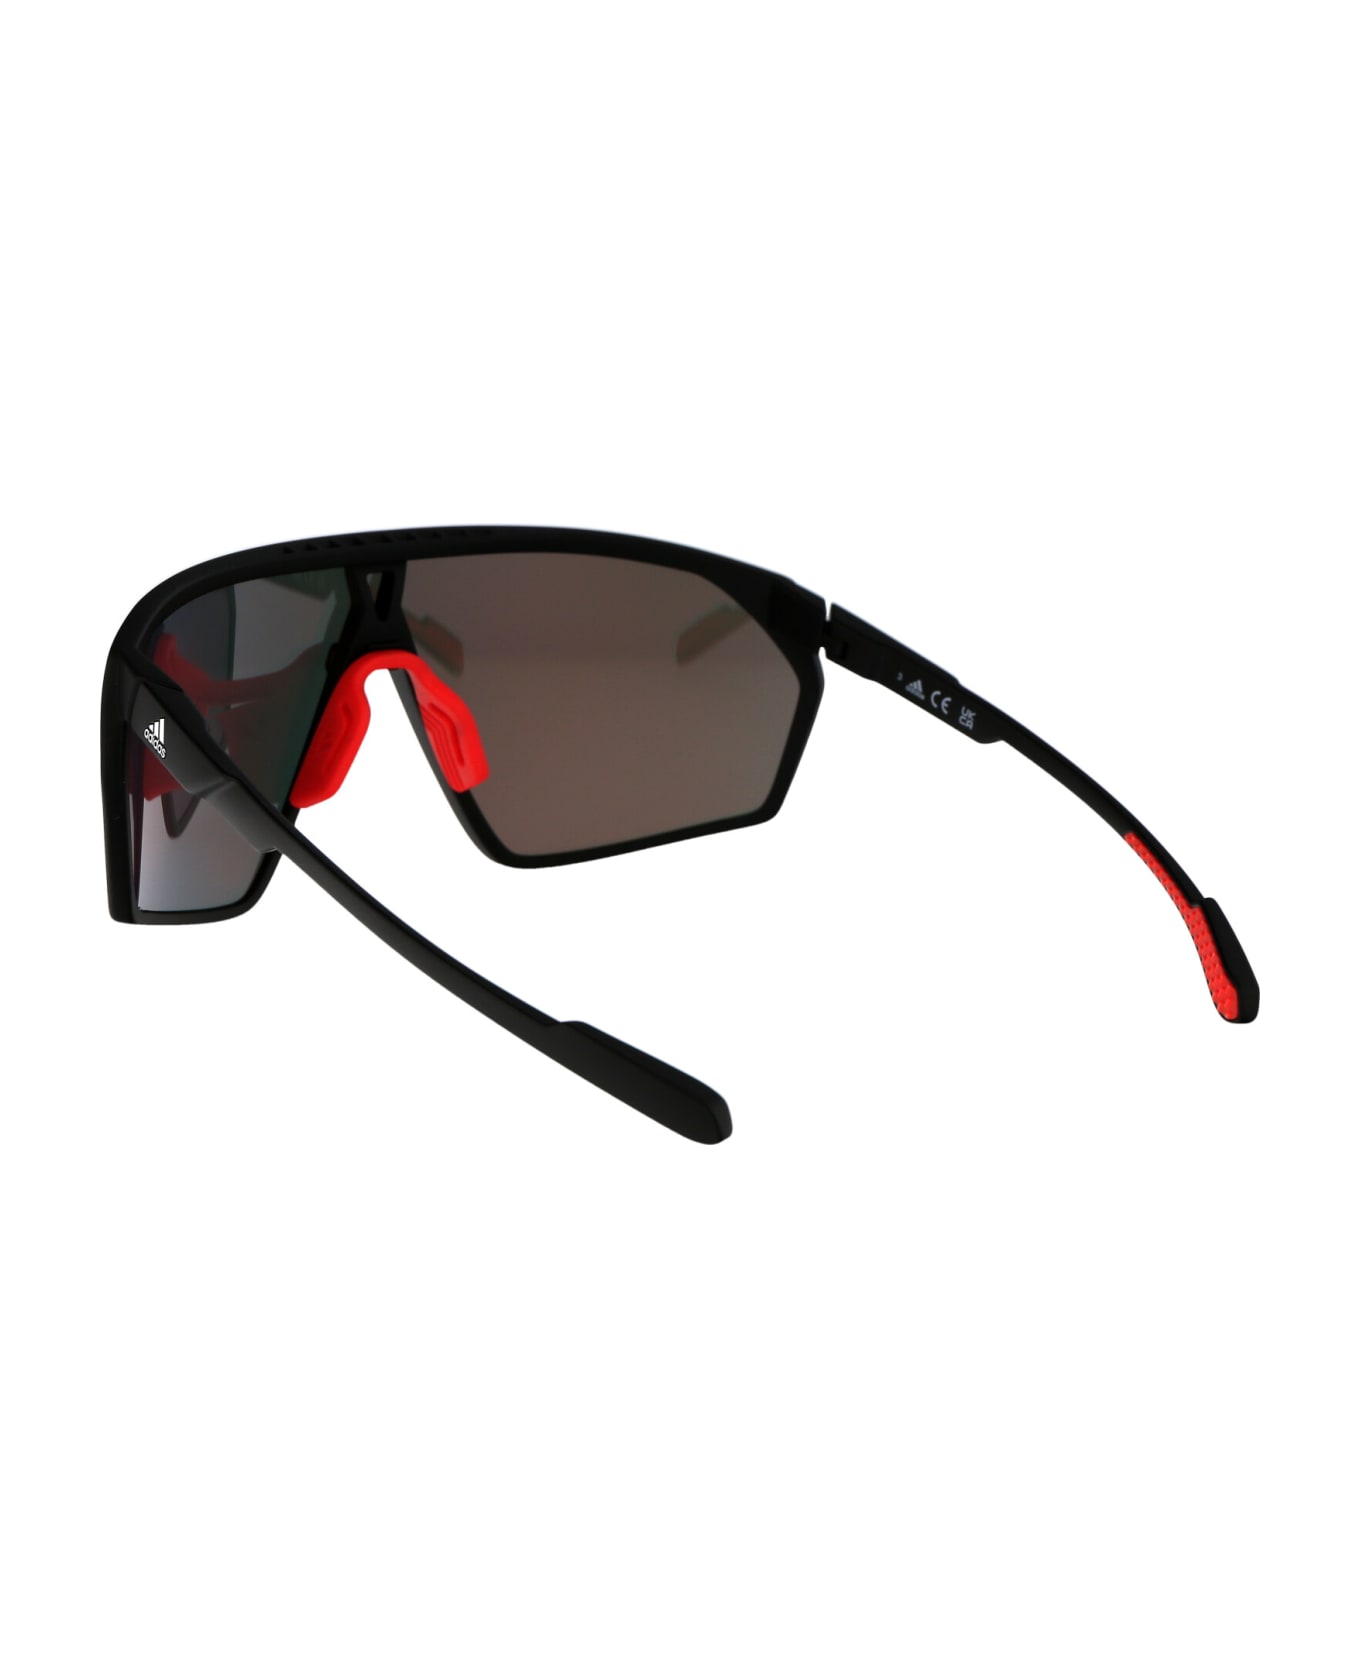 Adidas Prfm Shield Sunglasses - 02L Nero Opaco/Roviex Specchiato